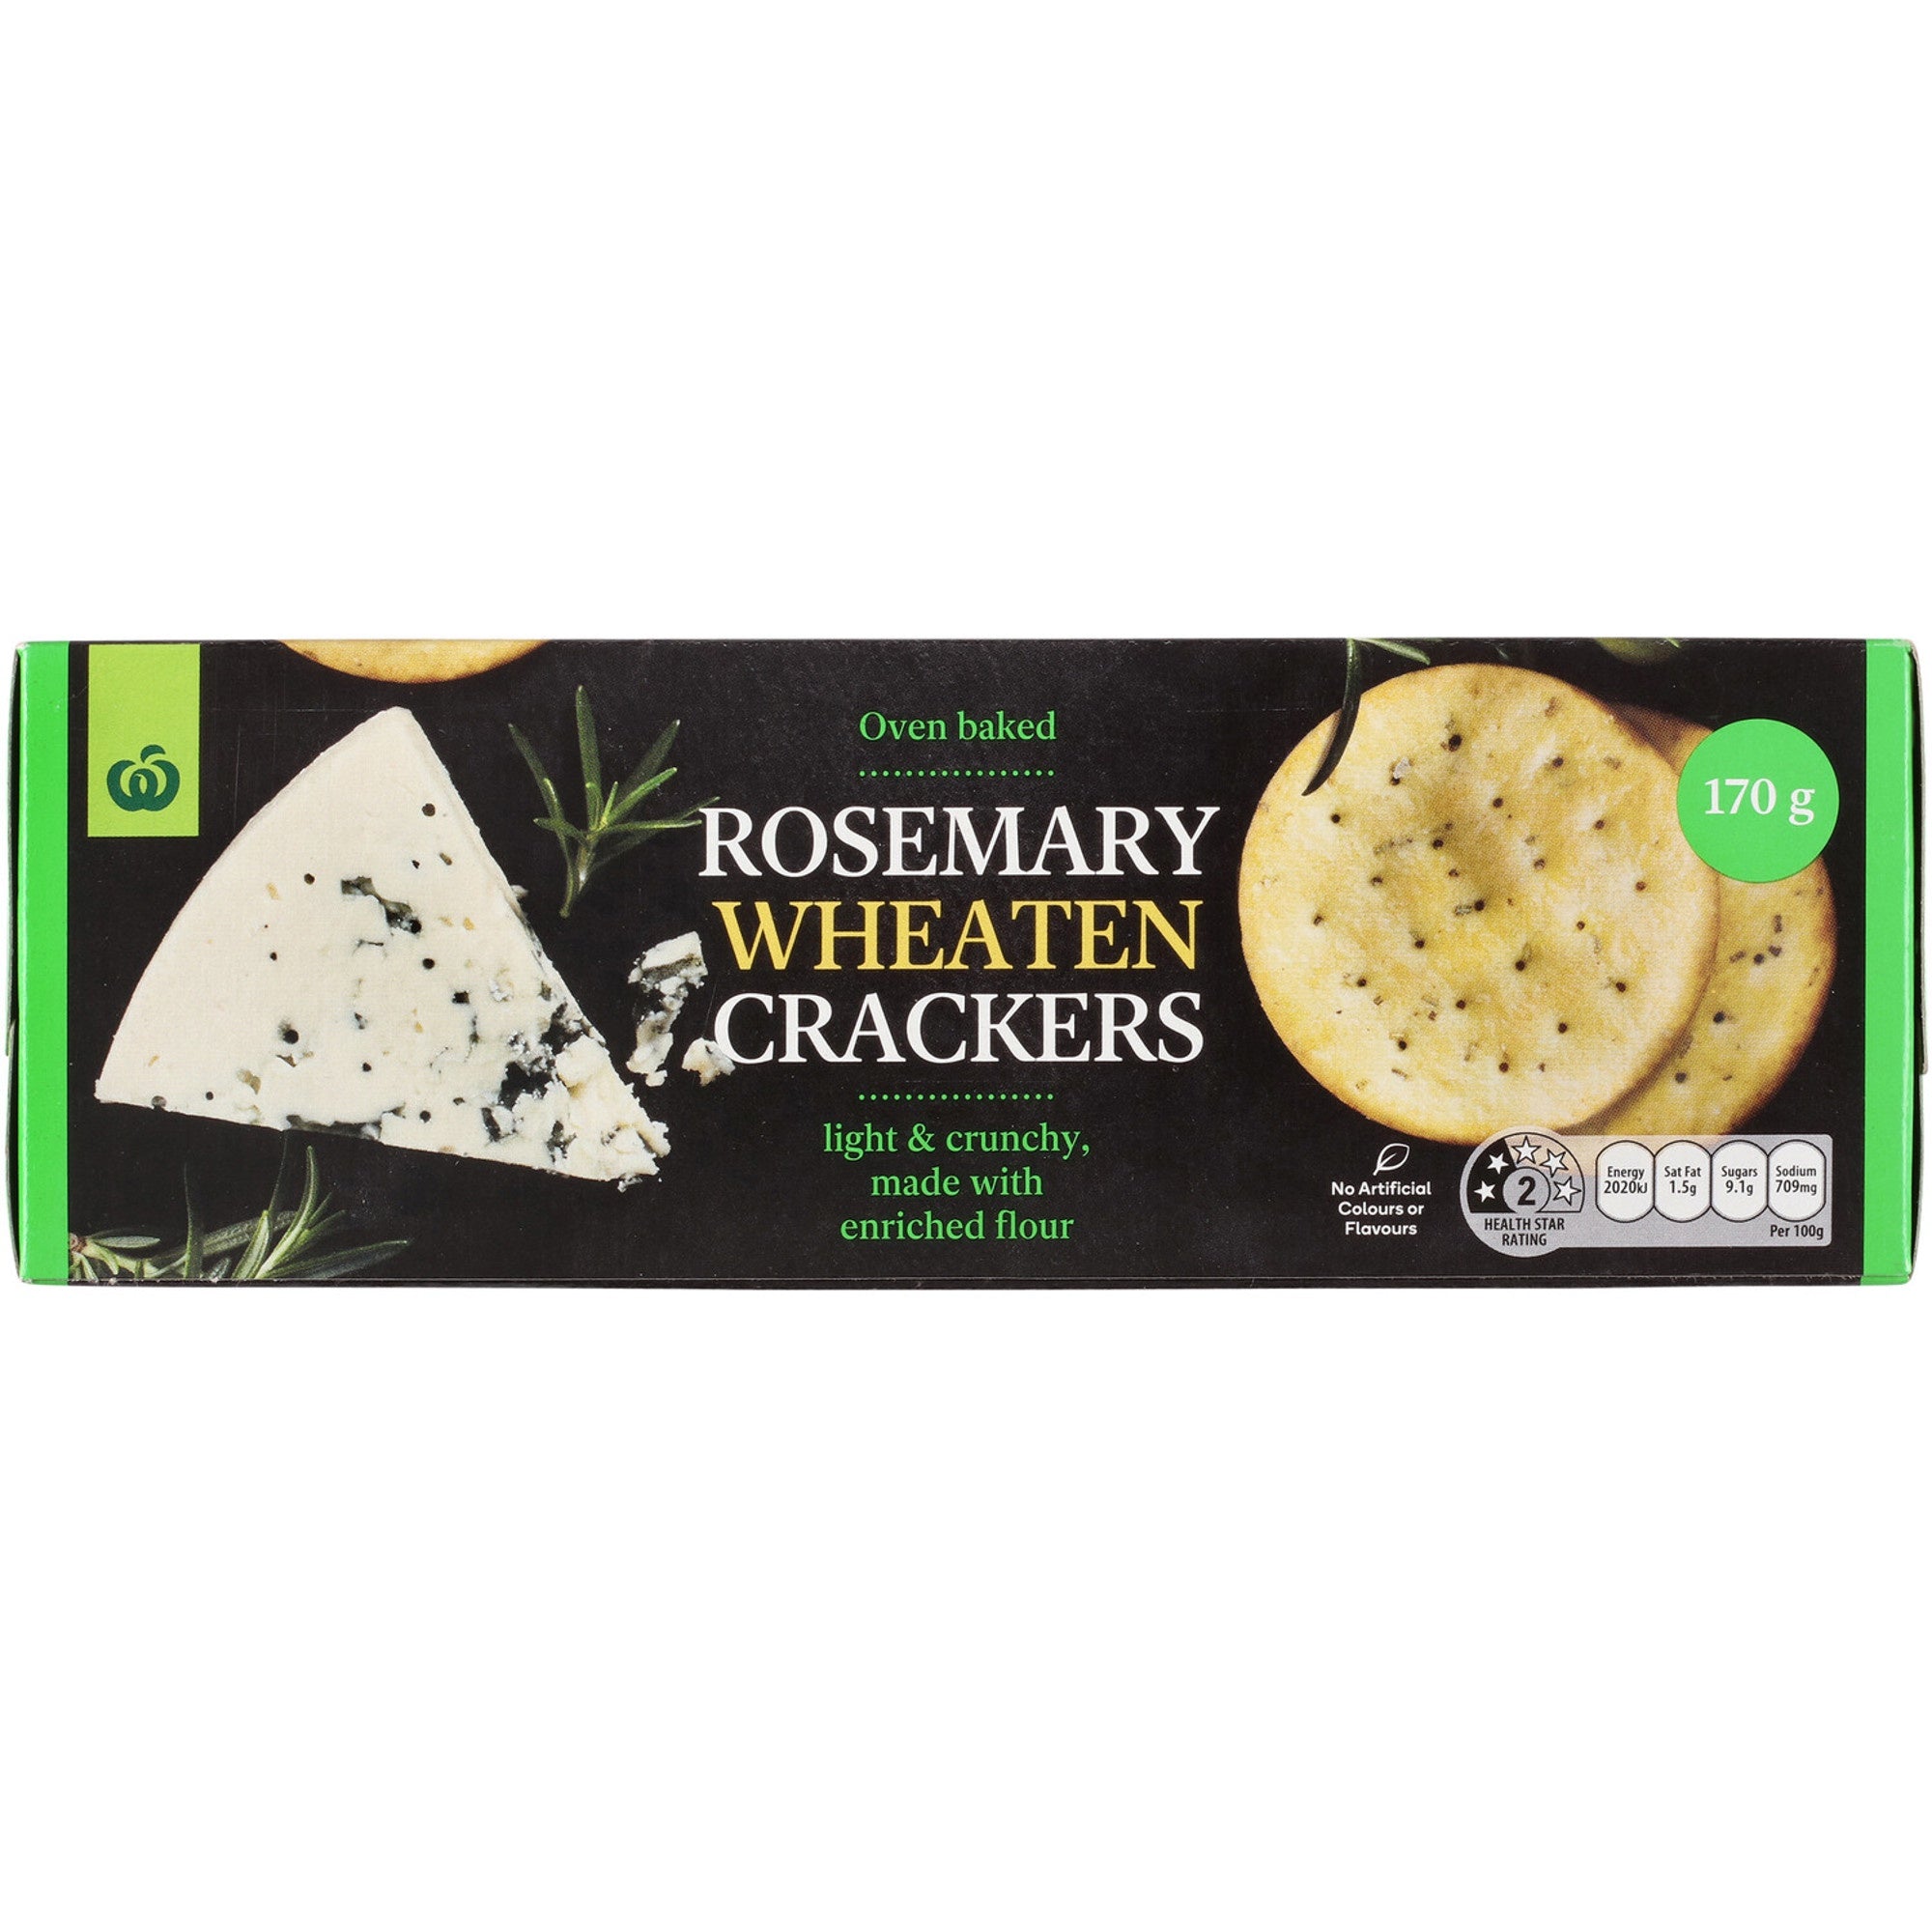 Select Rosemary Wheaten Crackers 170g